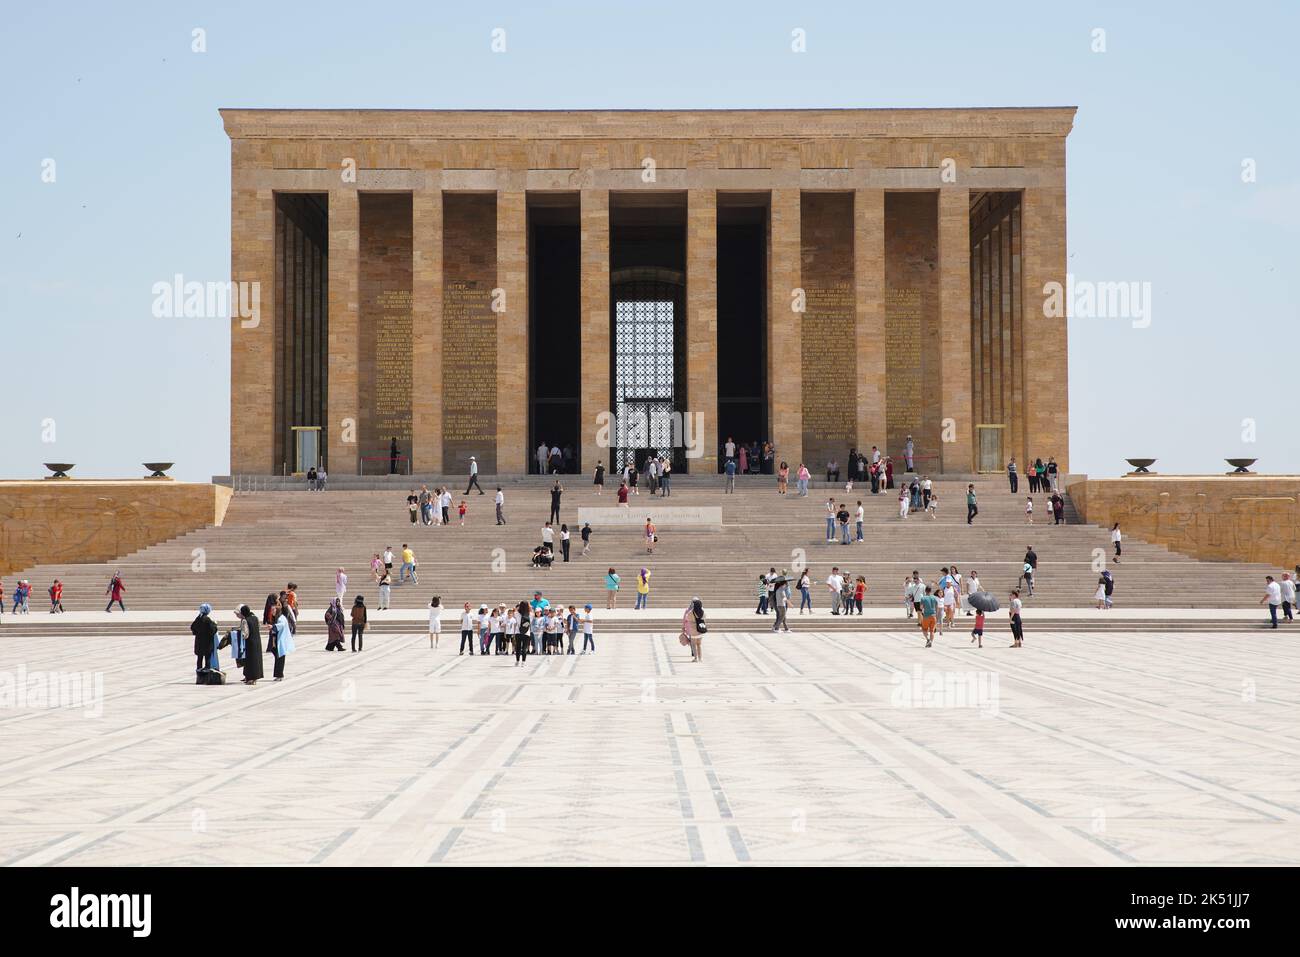 ANKARA, TURKIYE - JUNE 05, 2022: People visit Anitkabir where is the mausoleum of Ataturk, the founder and first President of the Republic of Turkiye. Stock Photo